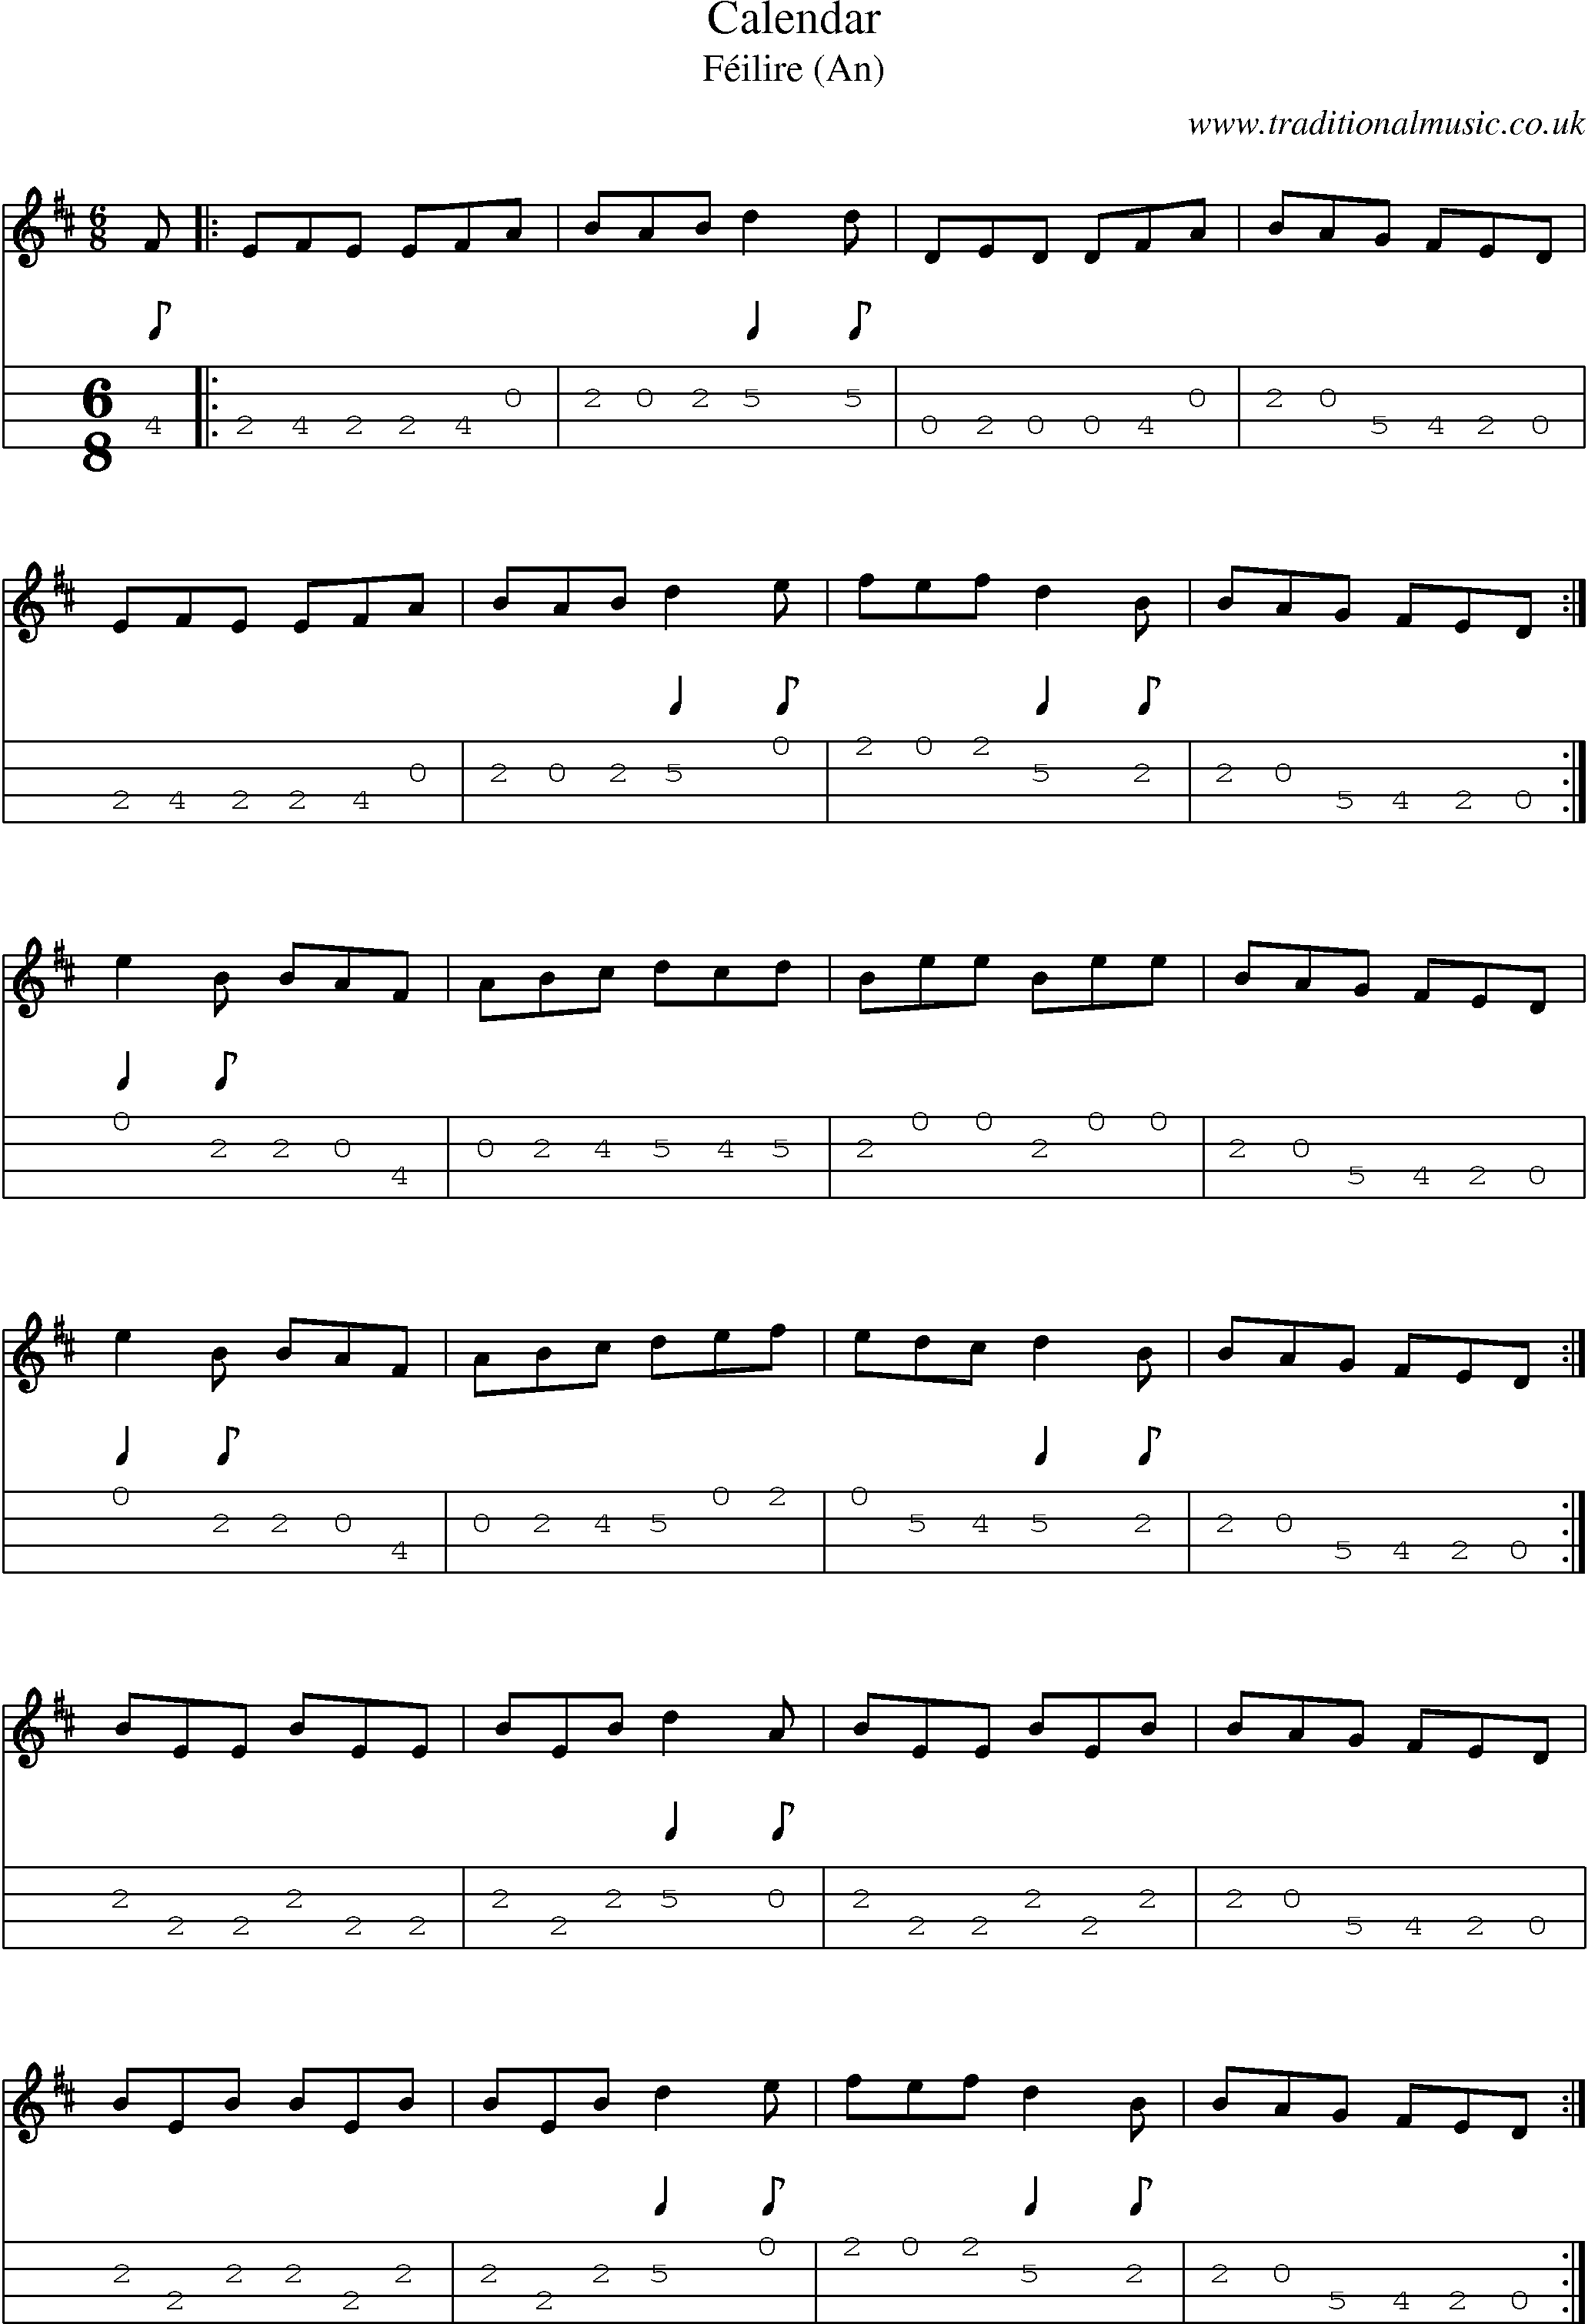 Music Score and Mandolin Tabs for Calendar